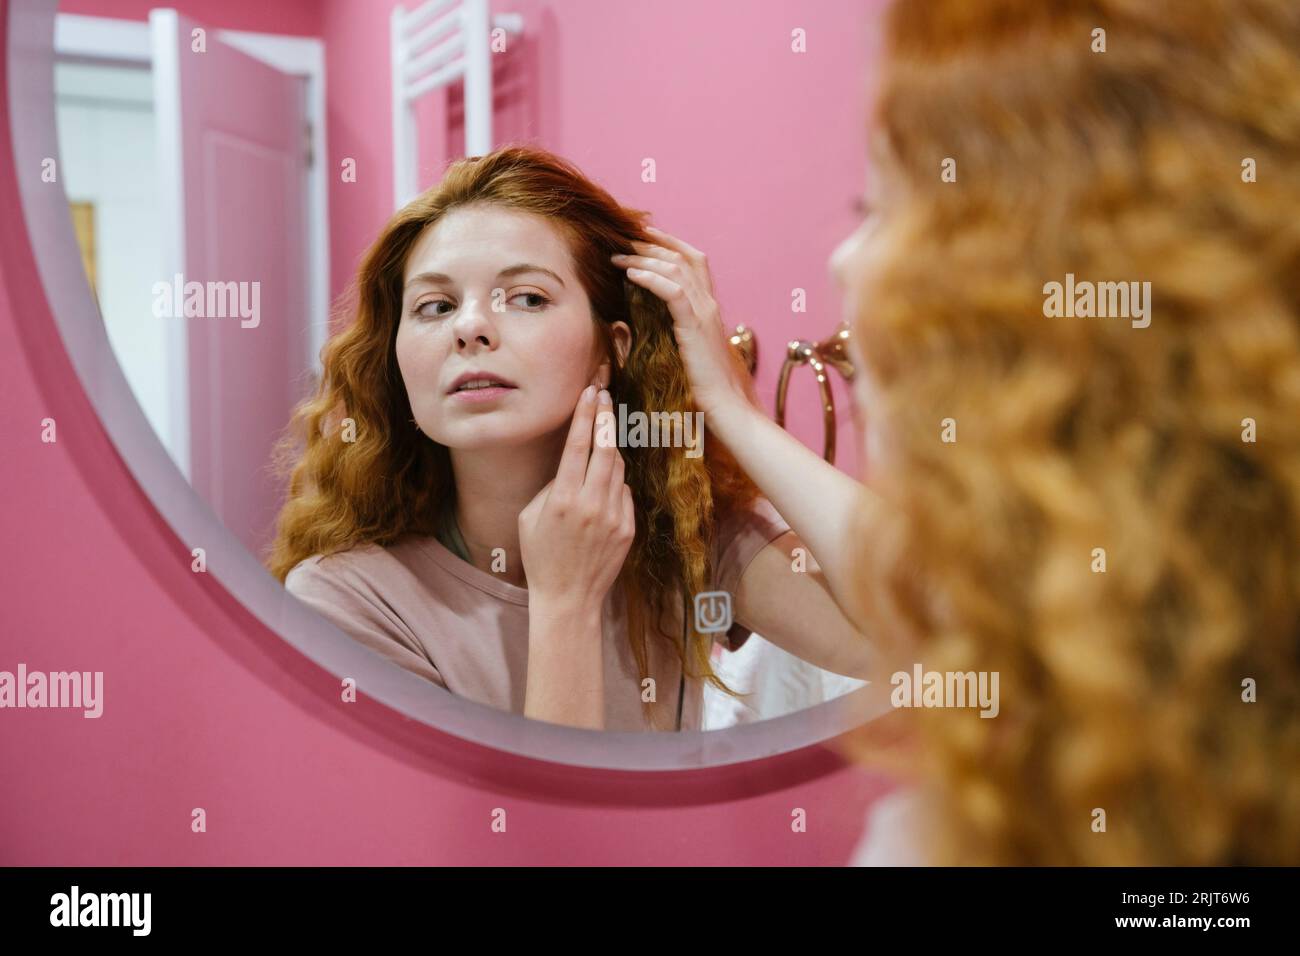 Reflection of redhead woman in bathroom mirror Stock Photo